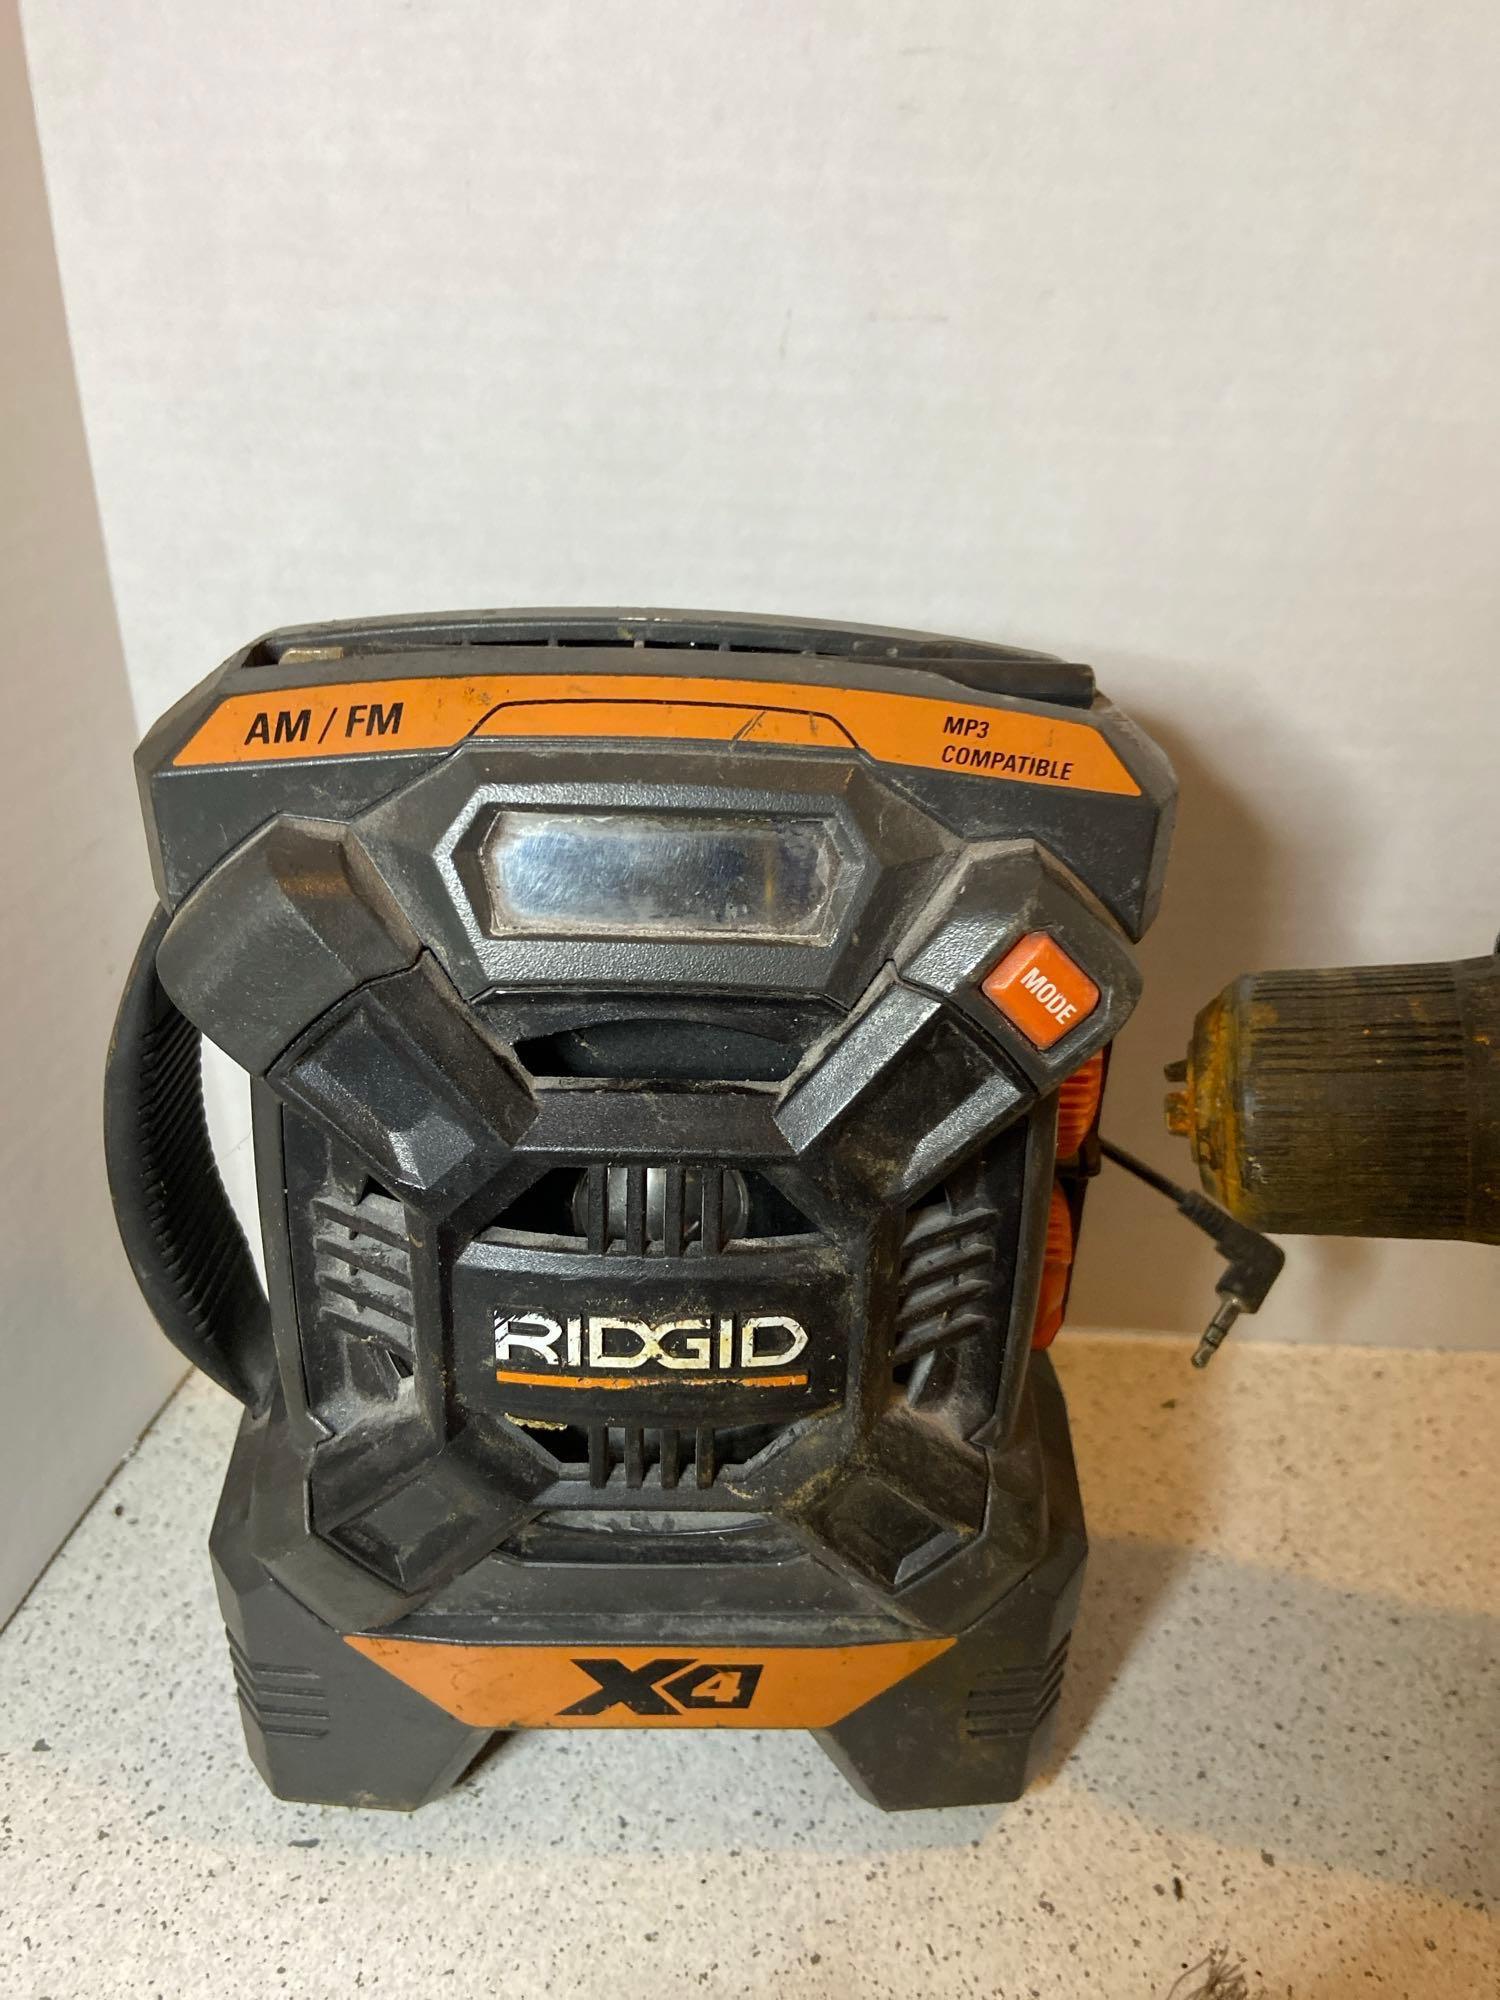 Rigid AM/FM radio drills flashlight angle grinder